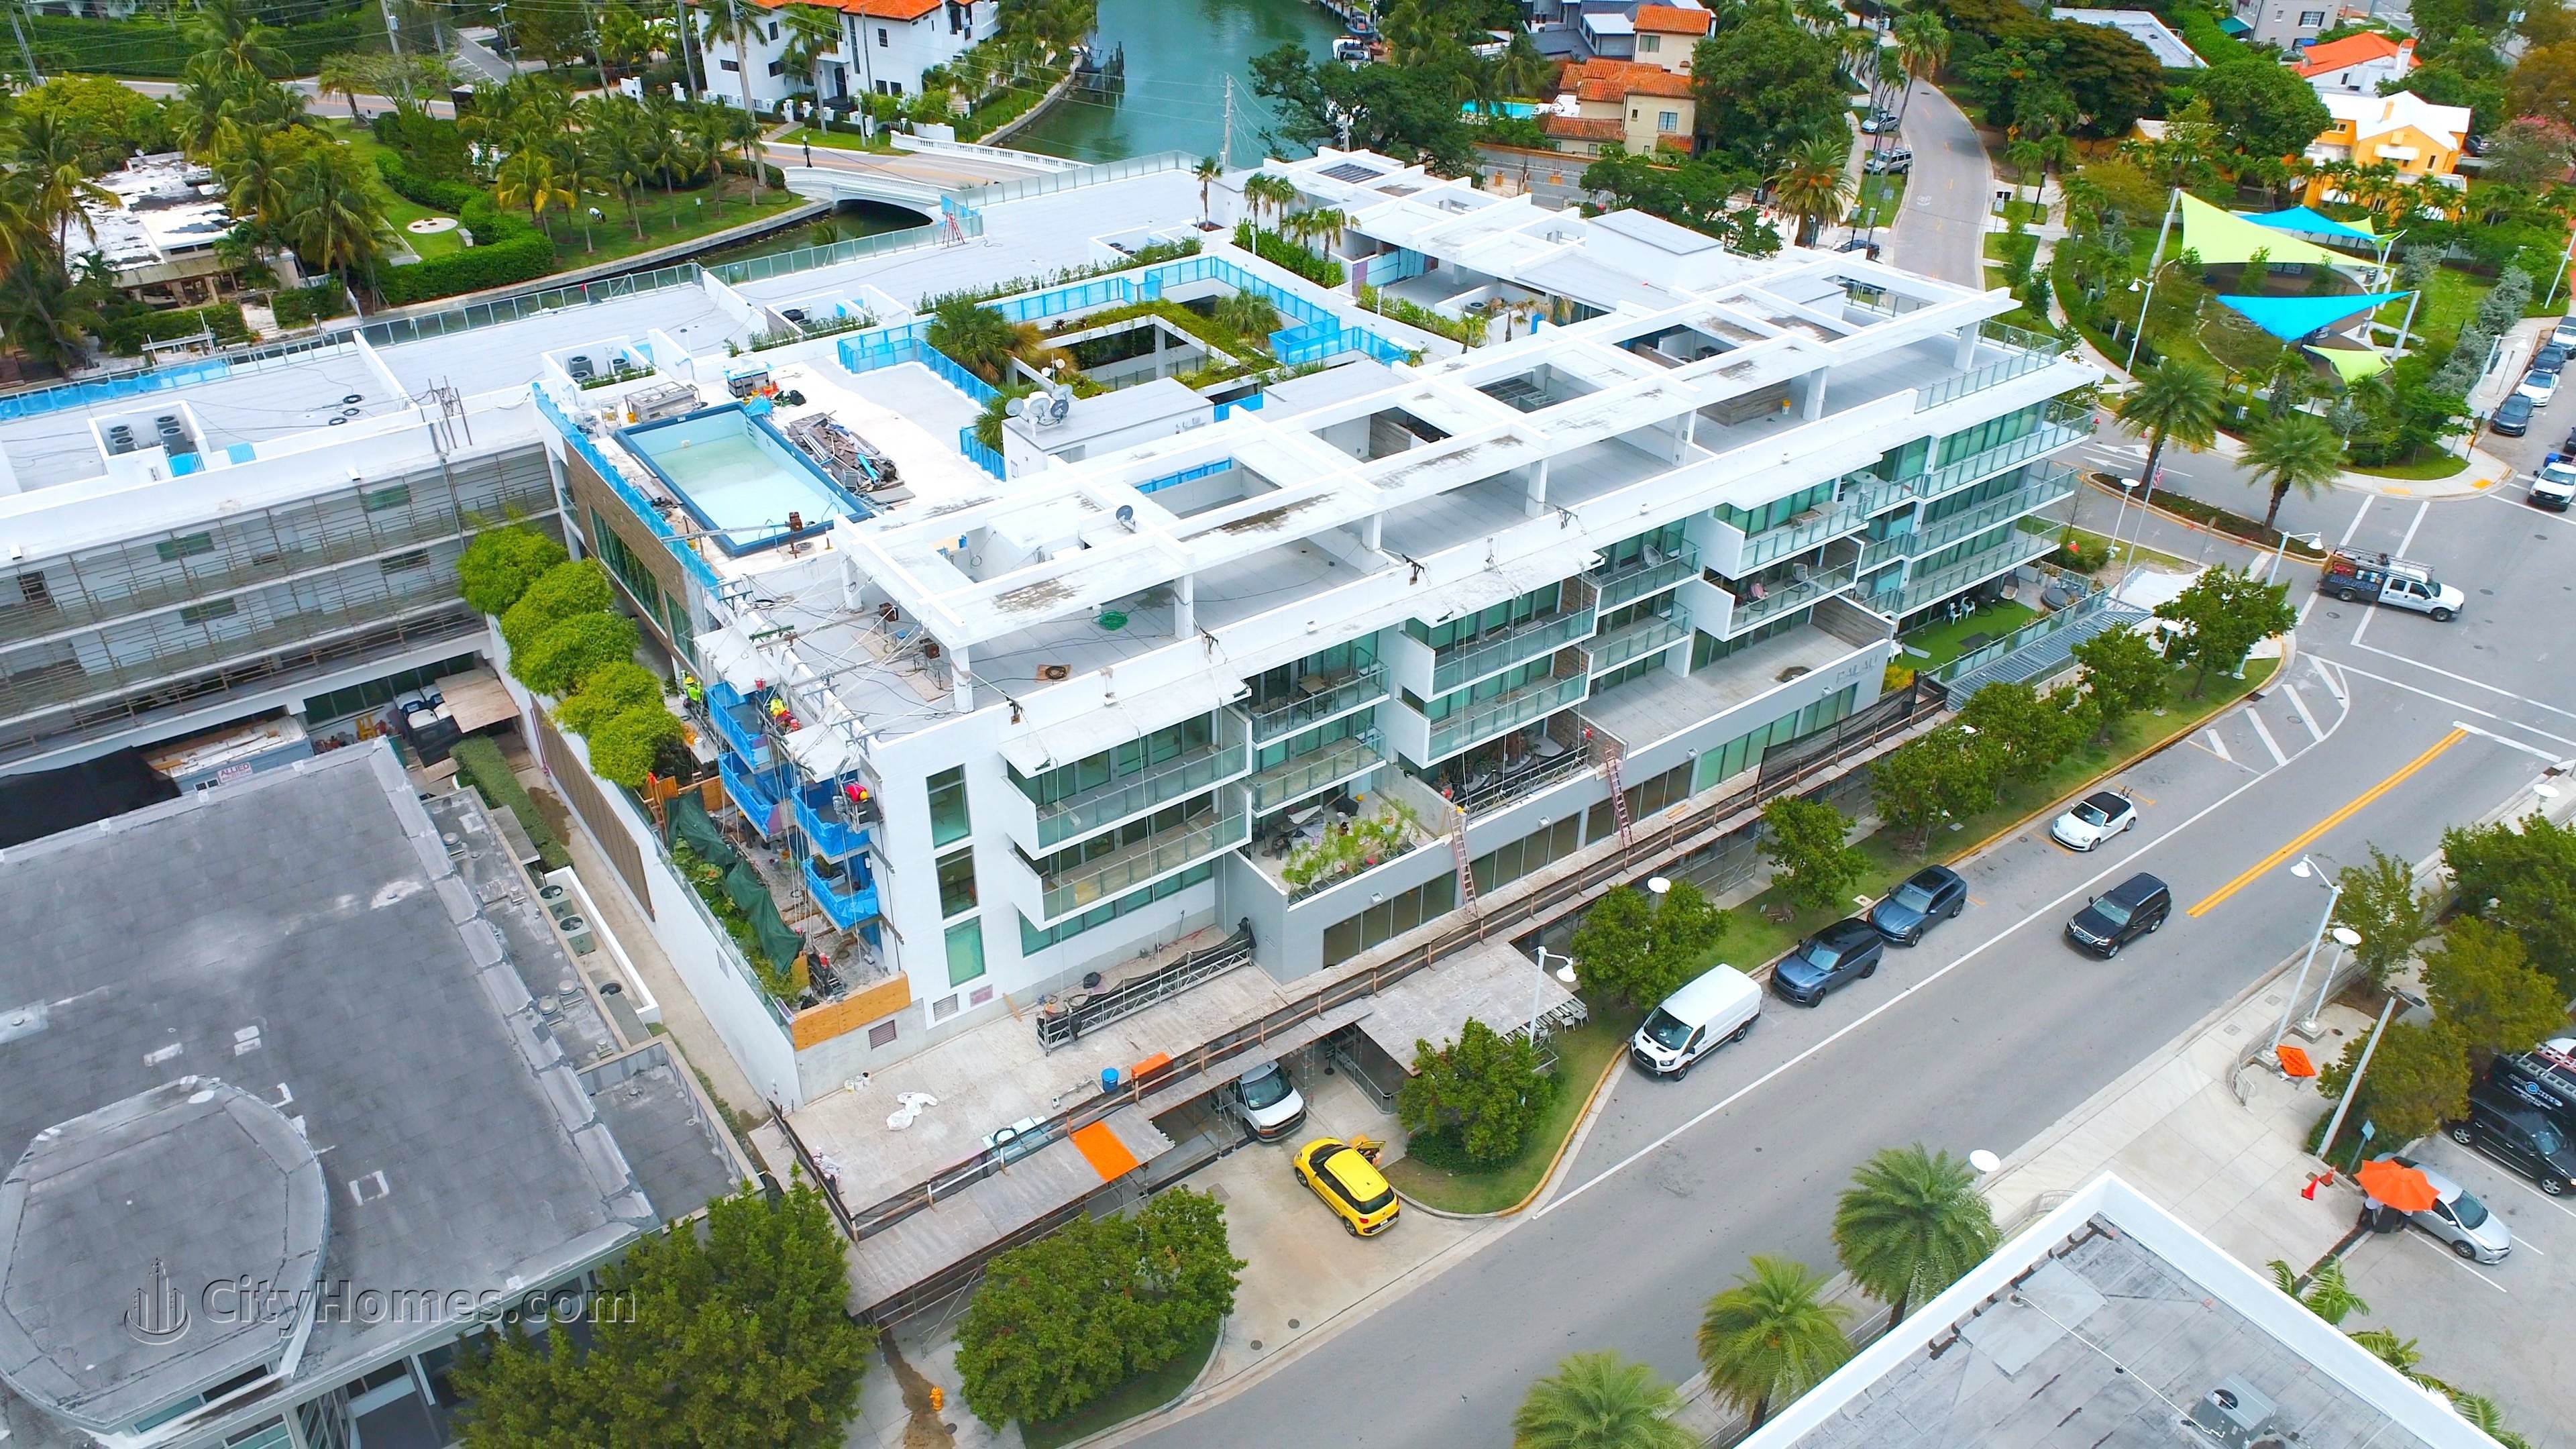 4. PALAU SUNSET HARBOUR building at 1201 20th Street, Mid Beach, Miami Beach, FL 33139